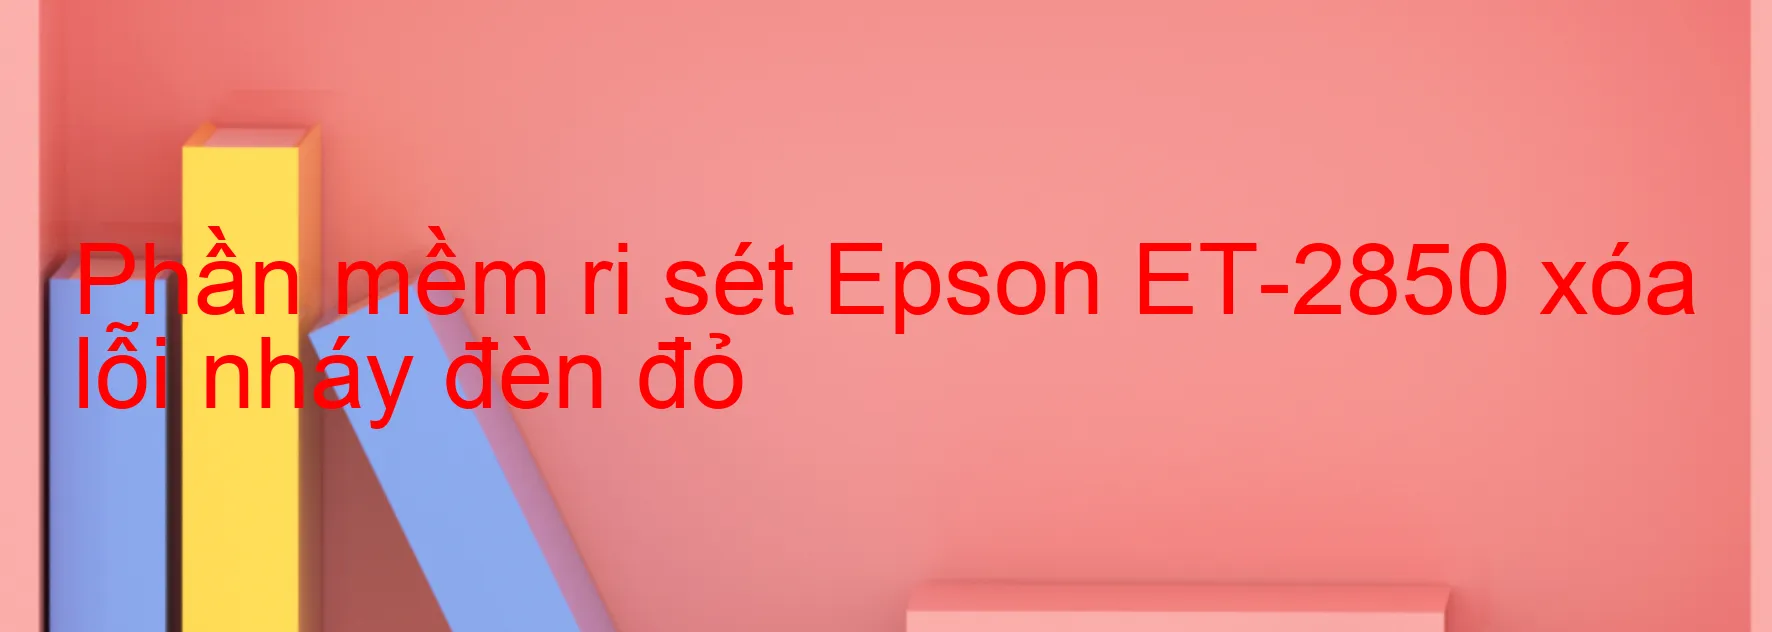 Phần mềm reset Epson ET-2850 xóa lỗi nháy đèn đỏ